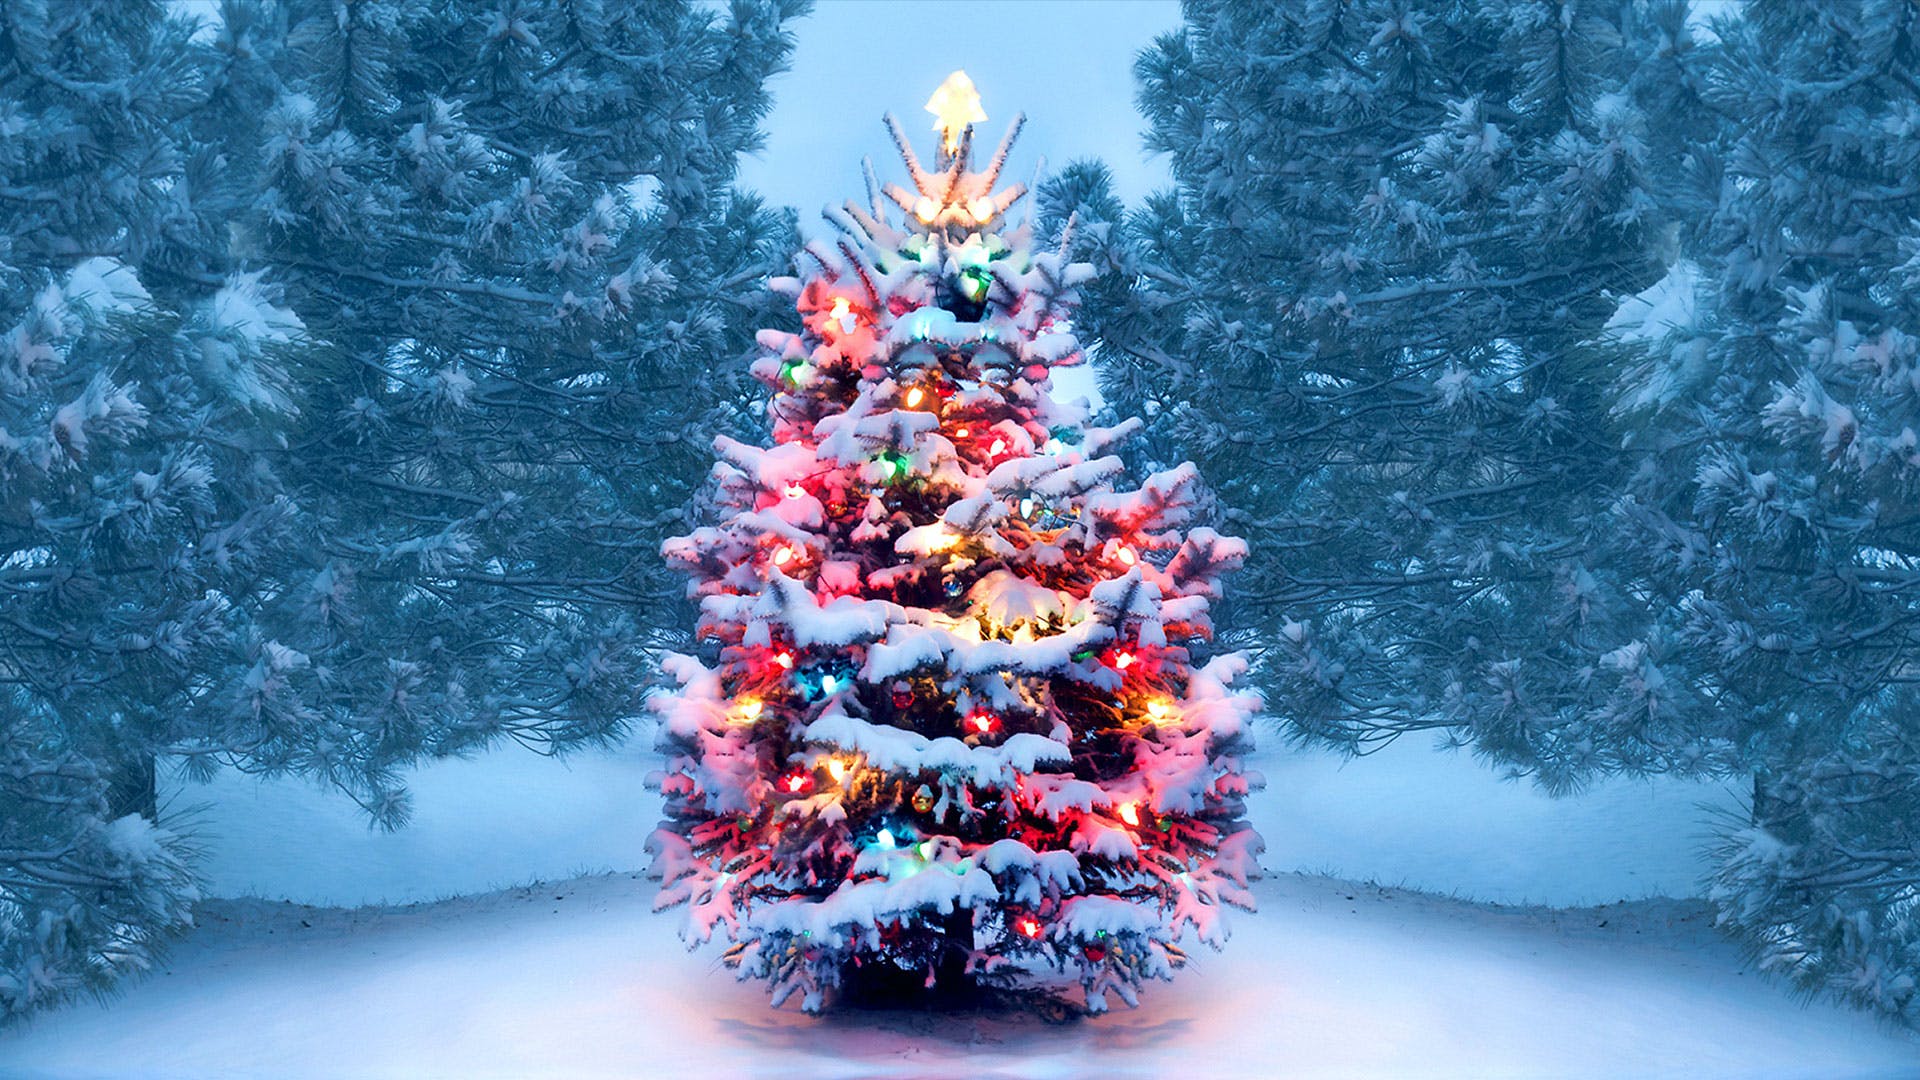 History of Christmas Trees